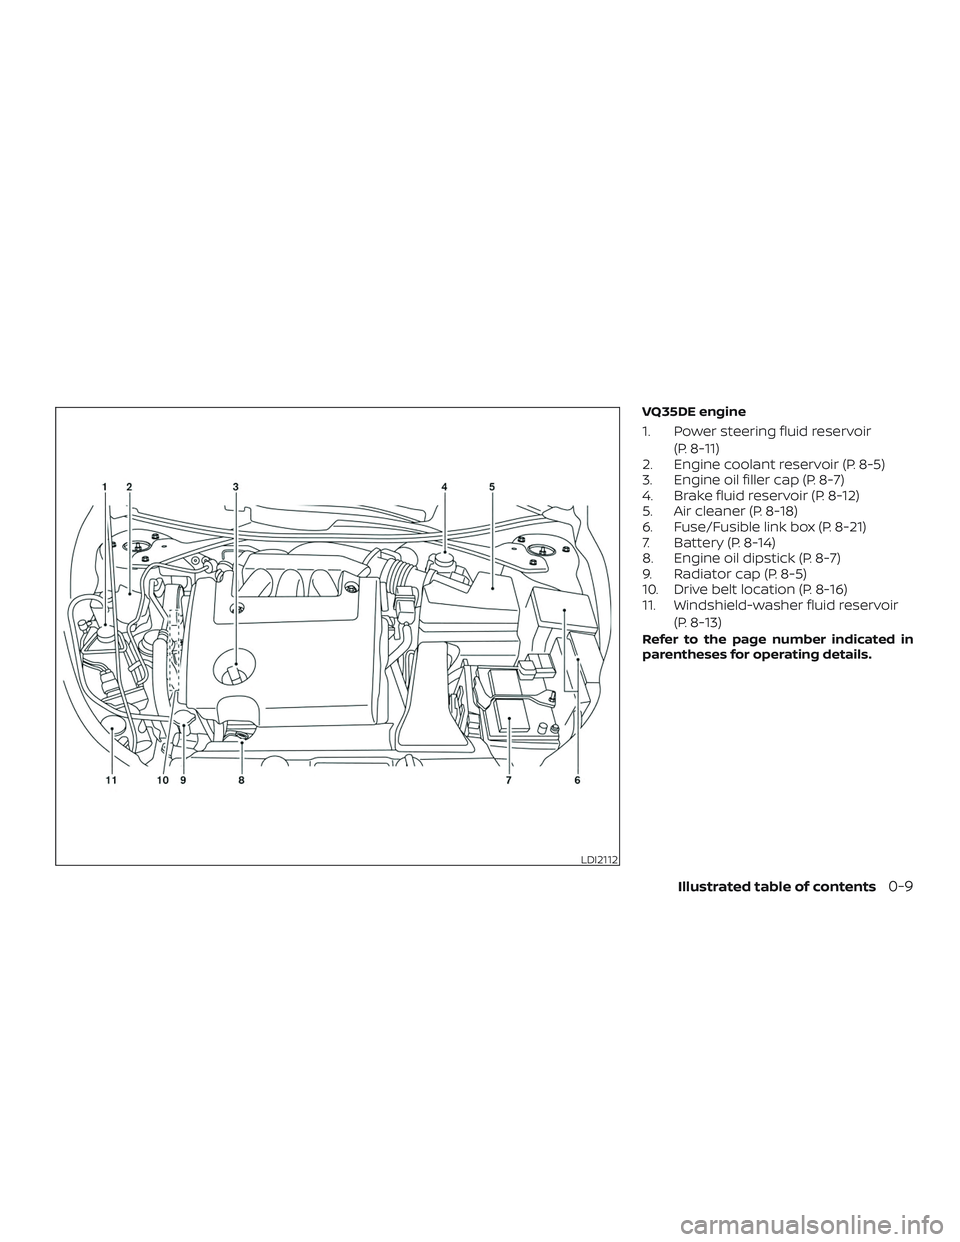 NISSAN ALTIMA 2018  Owner´s Manual VQ35DE engine
1. Power steering fluid reservoir(P. 8-11)
2. Engine coolant reservoir (P. 8-5)
3. Engine oil filler cap (P. 8-7)
4. Brake fluid reservoir (P. 8-12)
5. Air cleaner (P. 8-18)
6. Fuse/Fusi